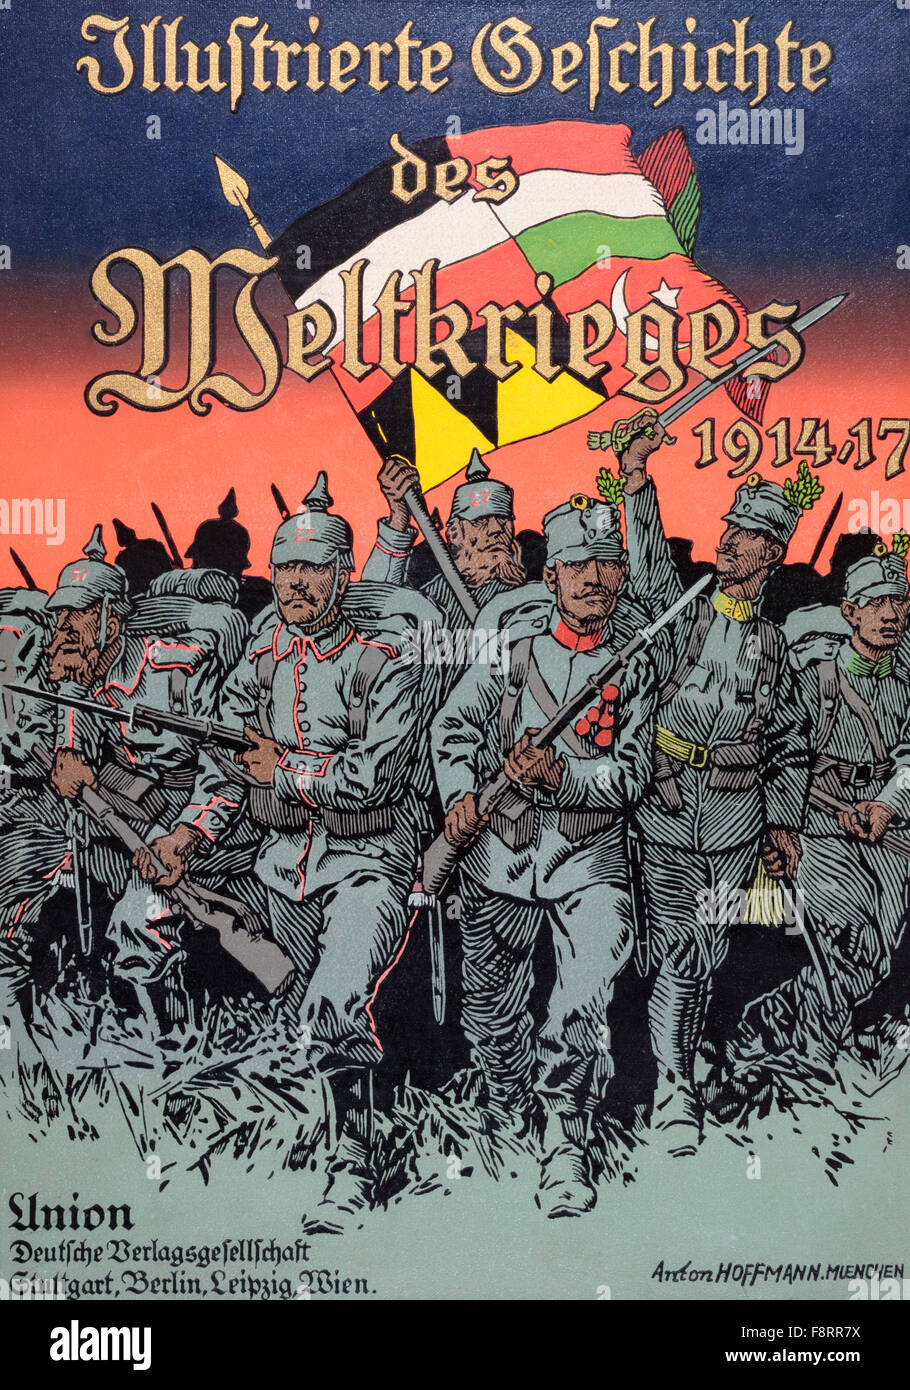 Front Cover of  Illustrierte Geschichte des Weltfrieges1914/15. Stock Photo